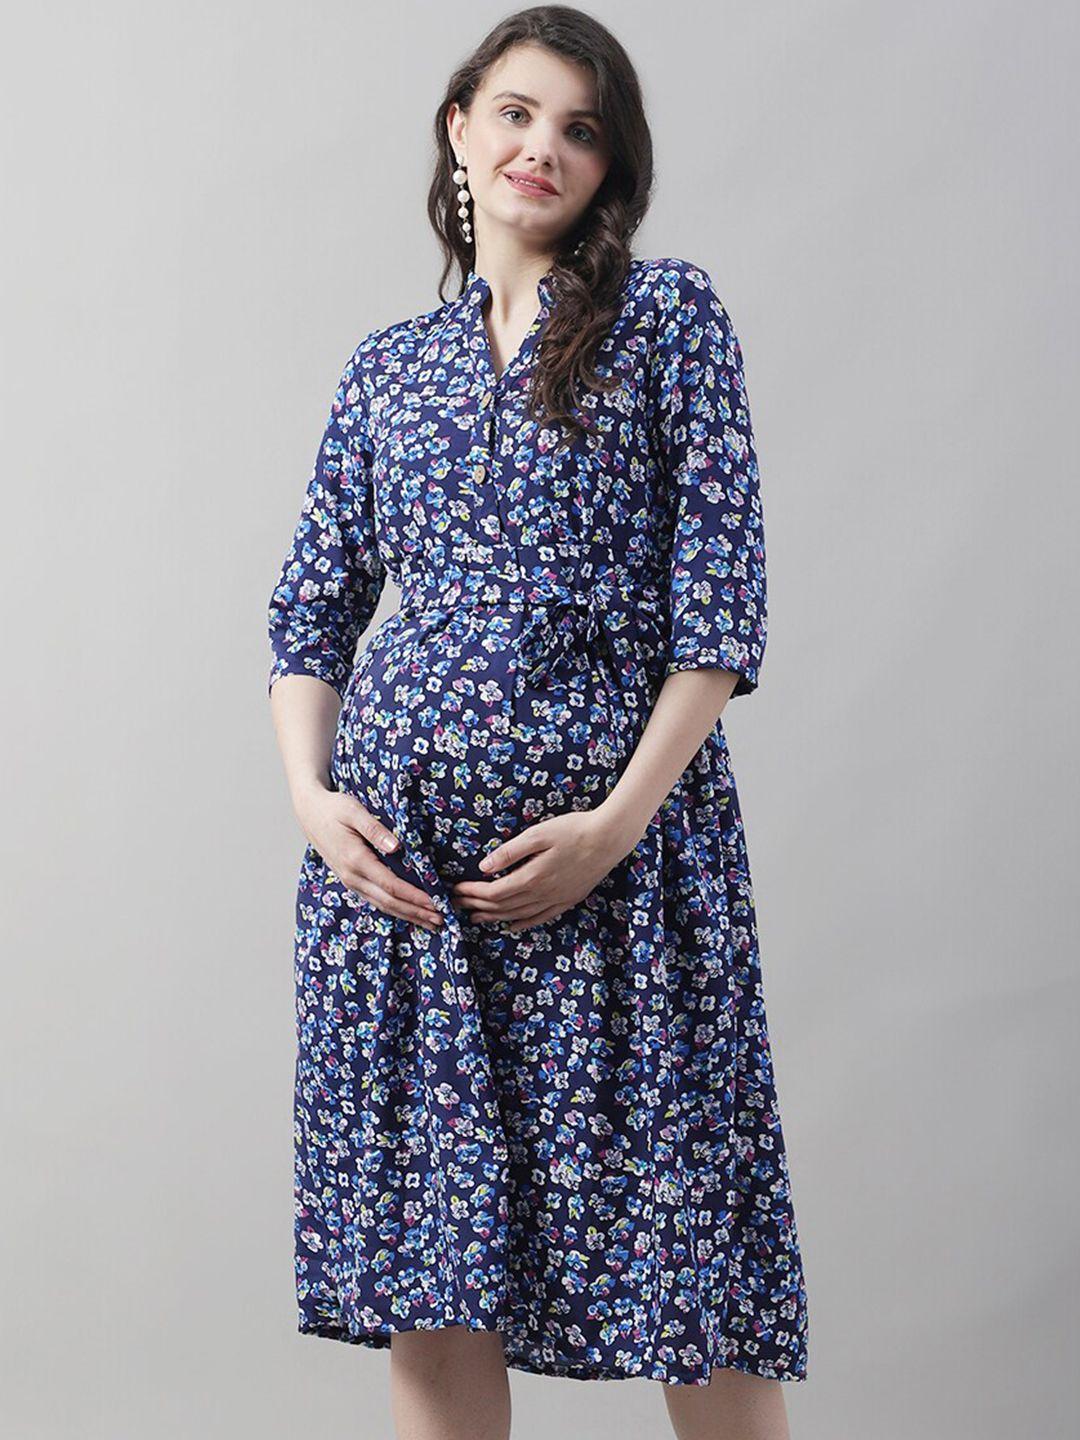 frempy floral print crepe maternity fit & flare dress